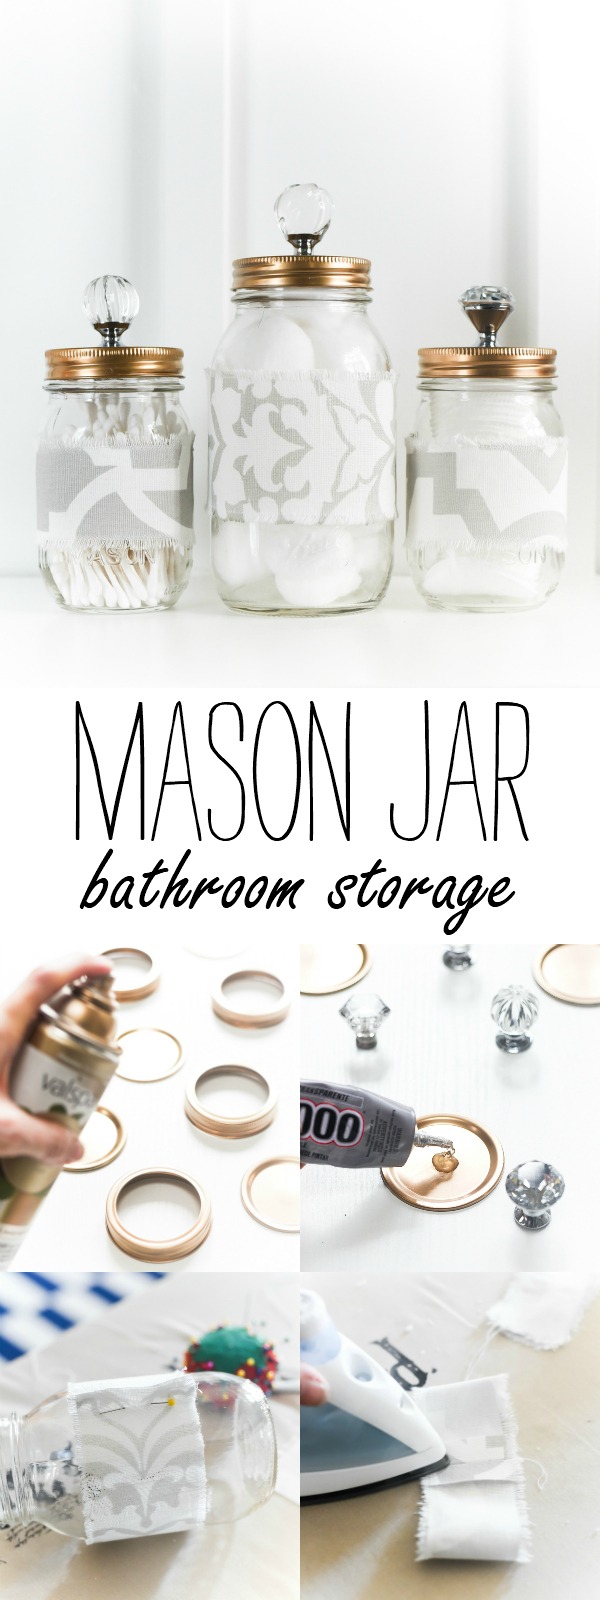 Mason Jar Cozies Bathroom Storage - Mason Jar Bathroom Storage - Mason Jars with Gold Lids Crystal Glass Knobs